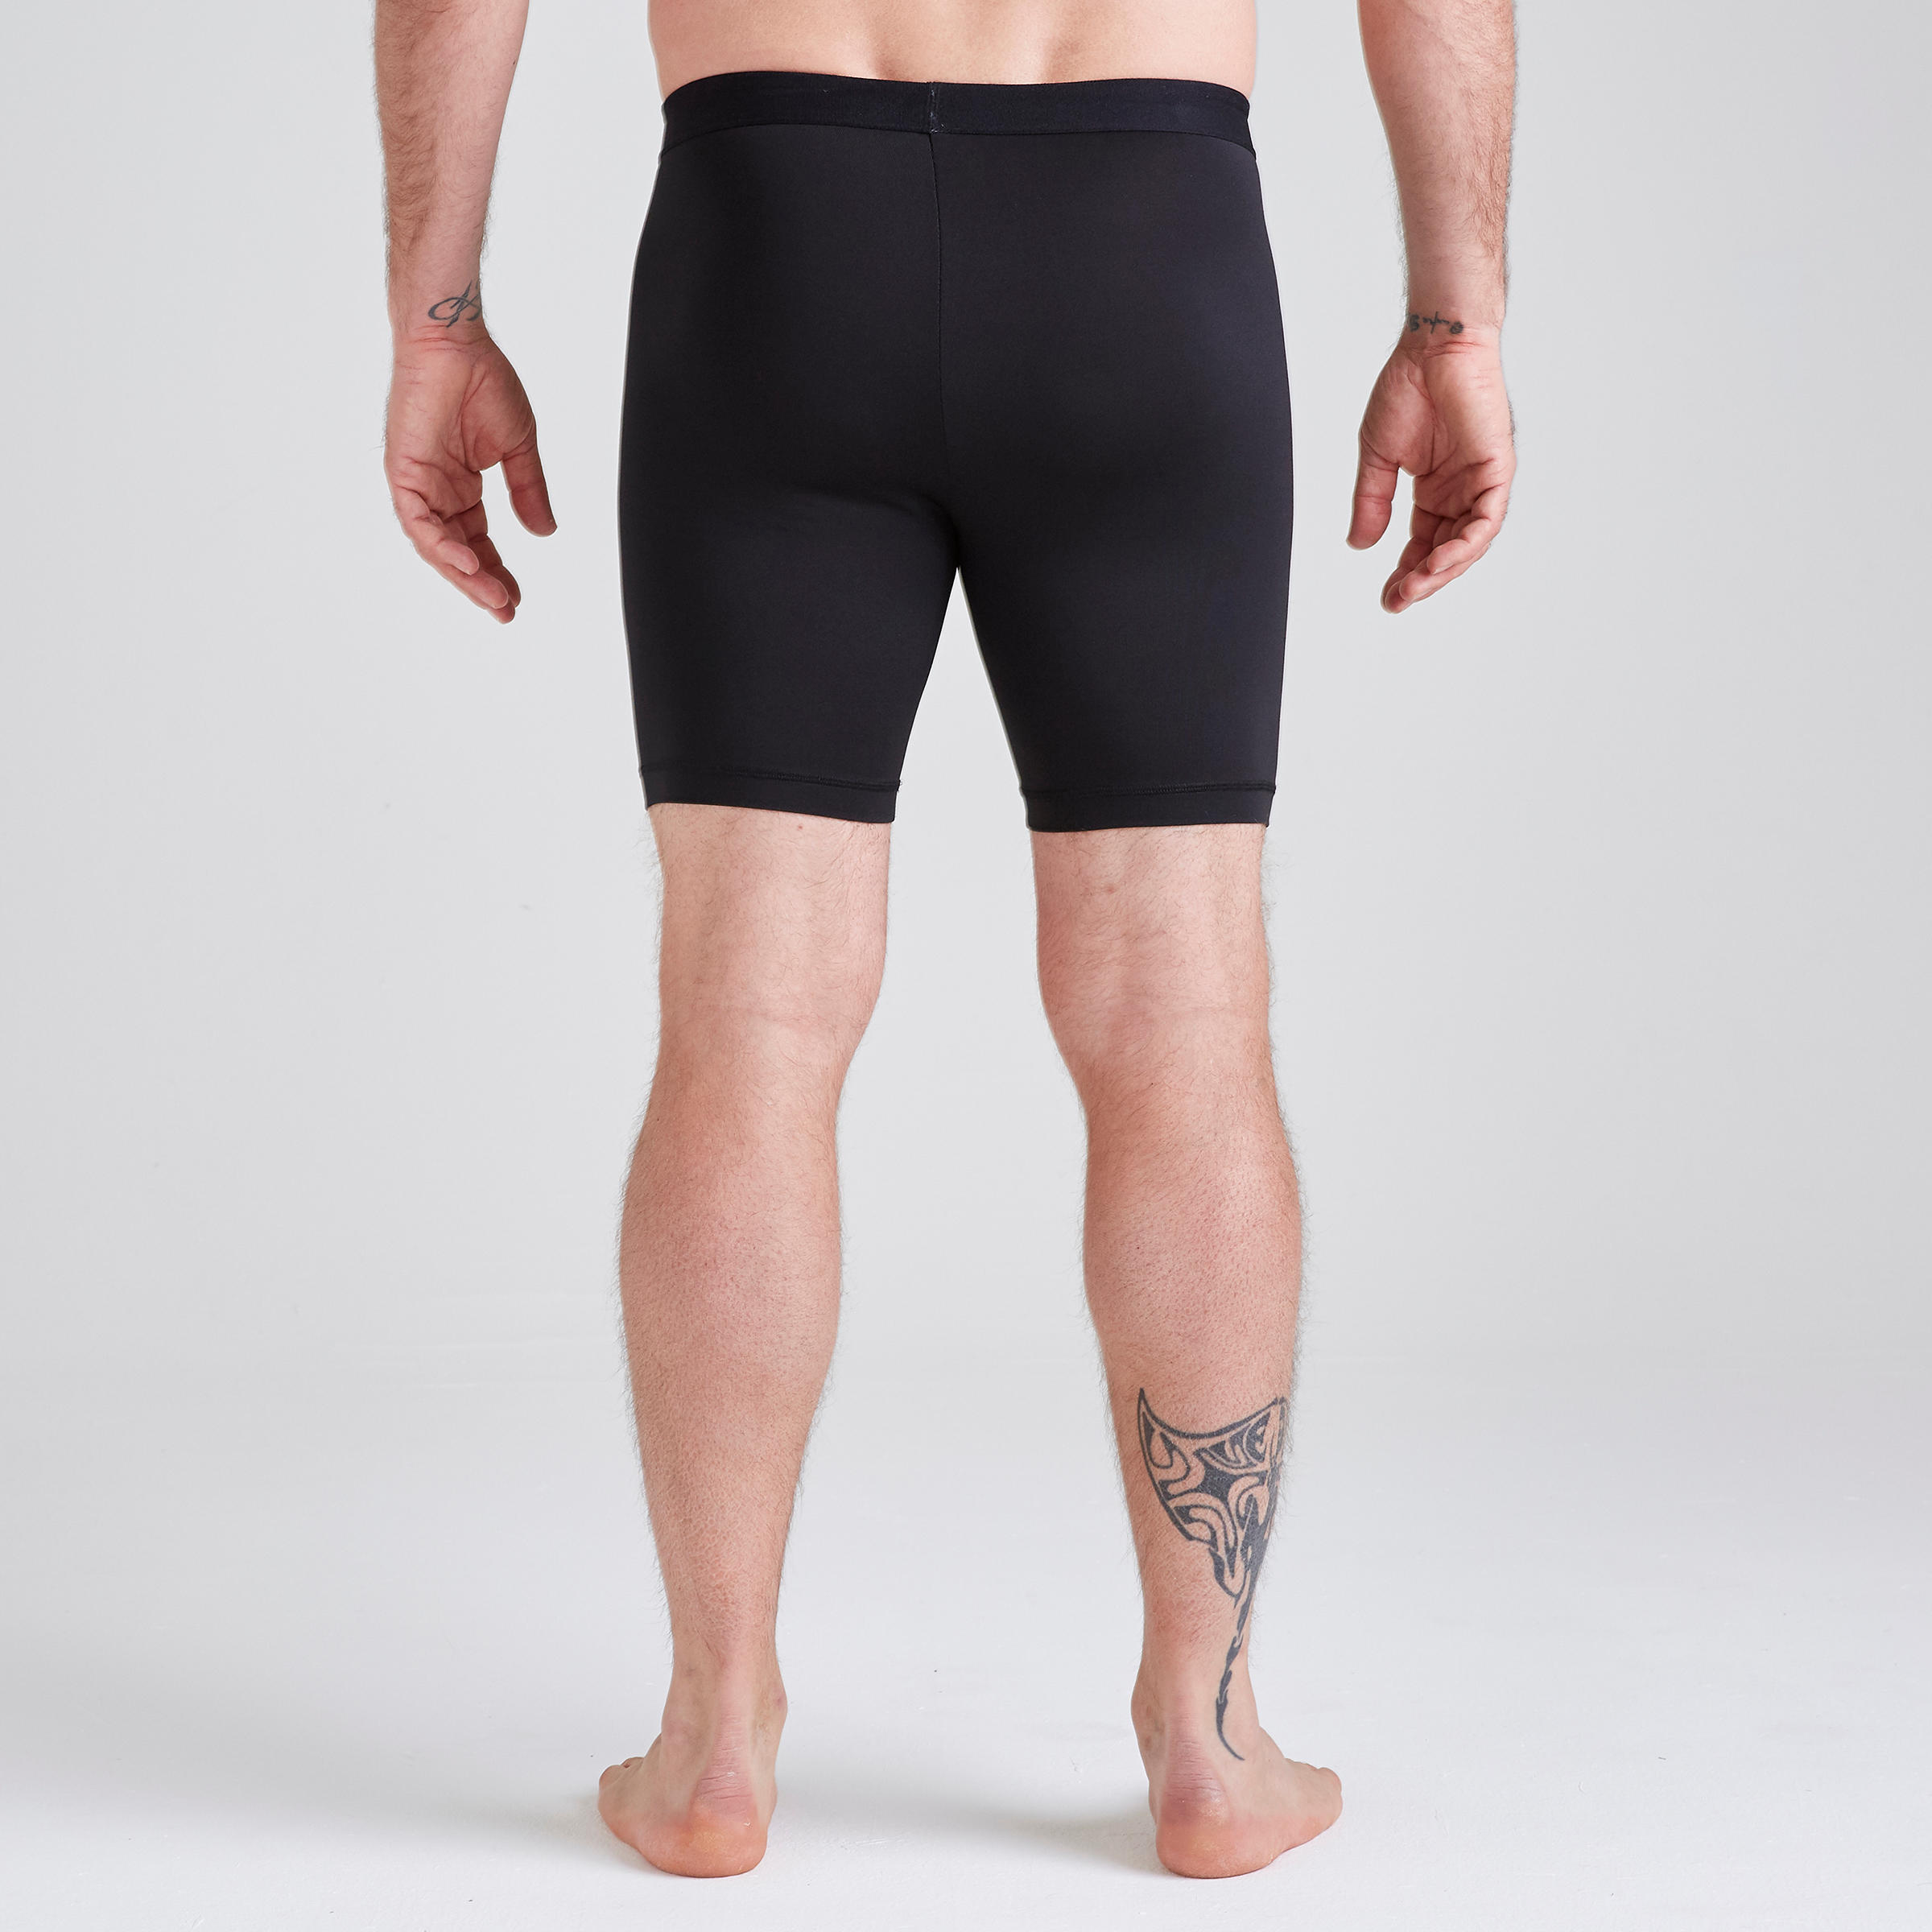 Kipsta Decathlon Football Undershorts Keepcomfort - ShopStyle Activewear  Shorts